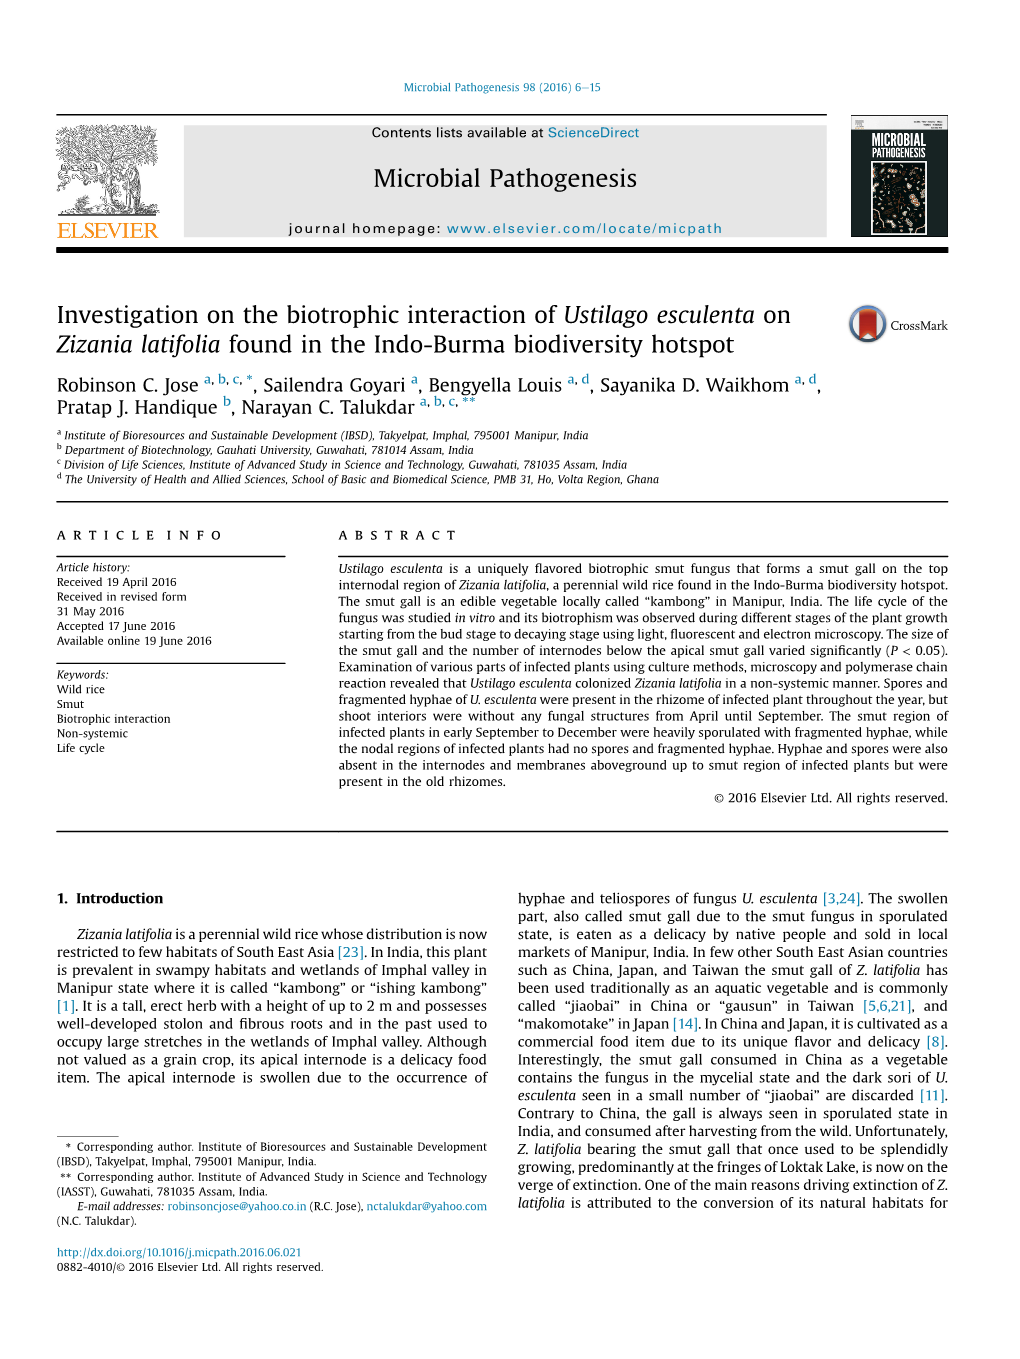 Investigation on the Biotrophic Interaction of Ustilago Esculenta on Zizania Latifolia Found in the Indo-Burma Biodiversity Hotspot